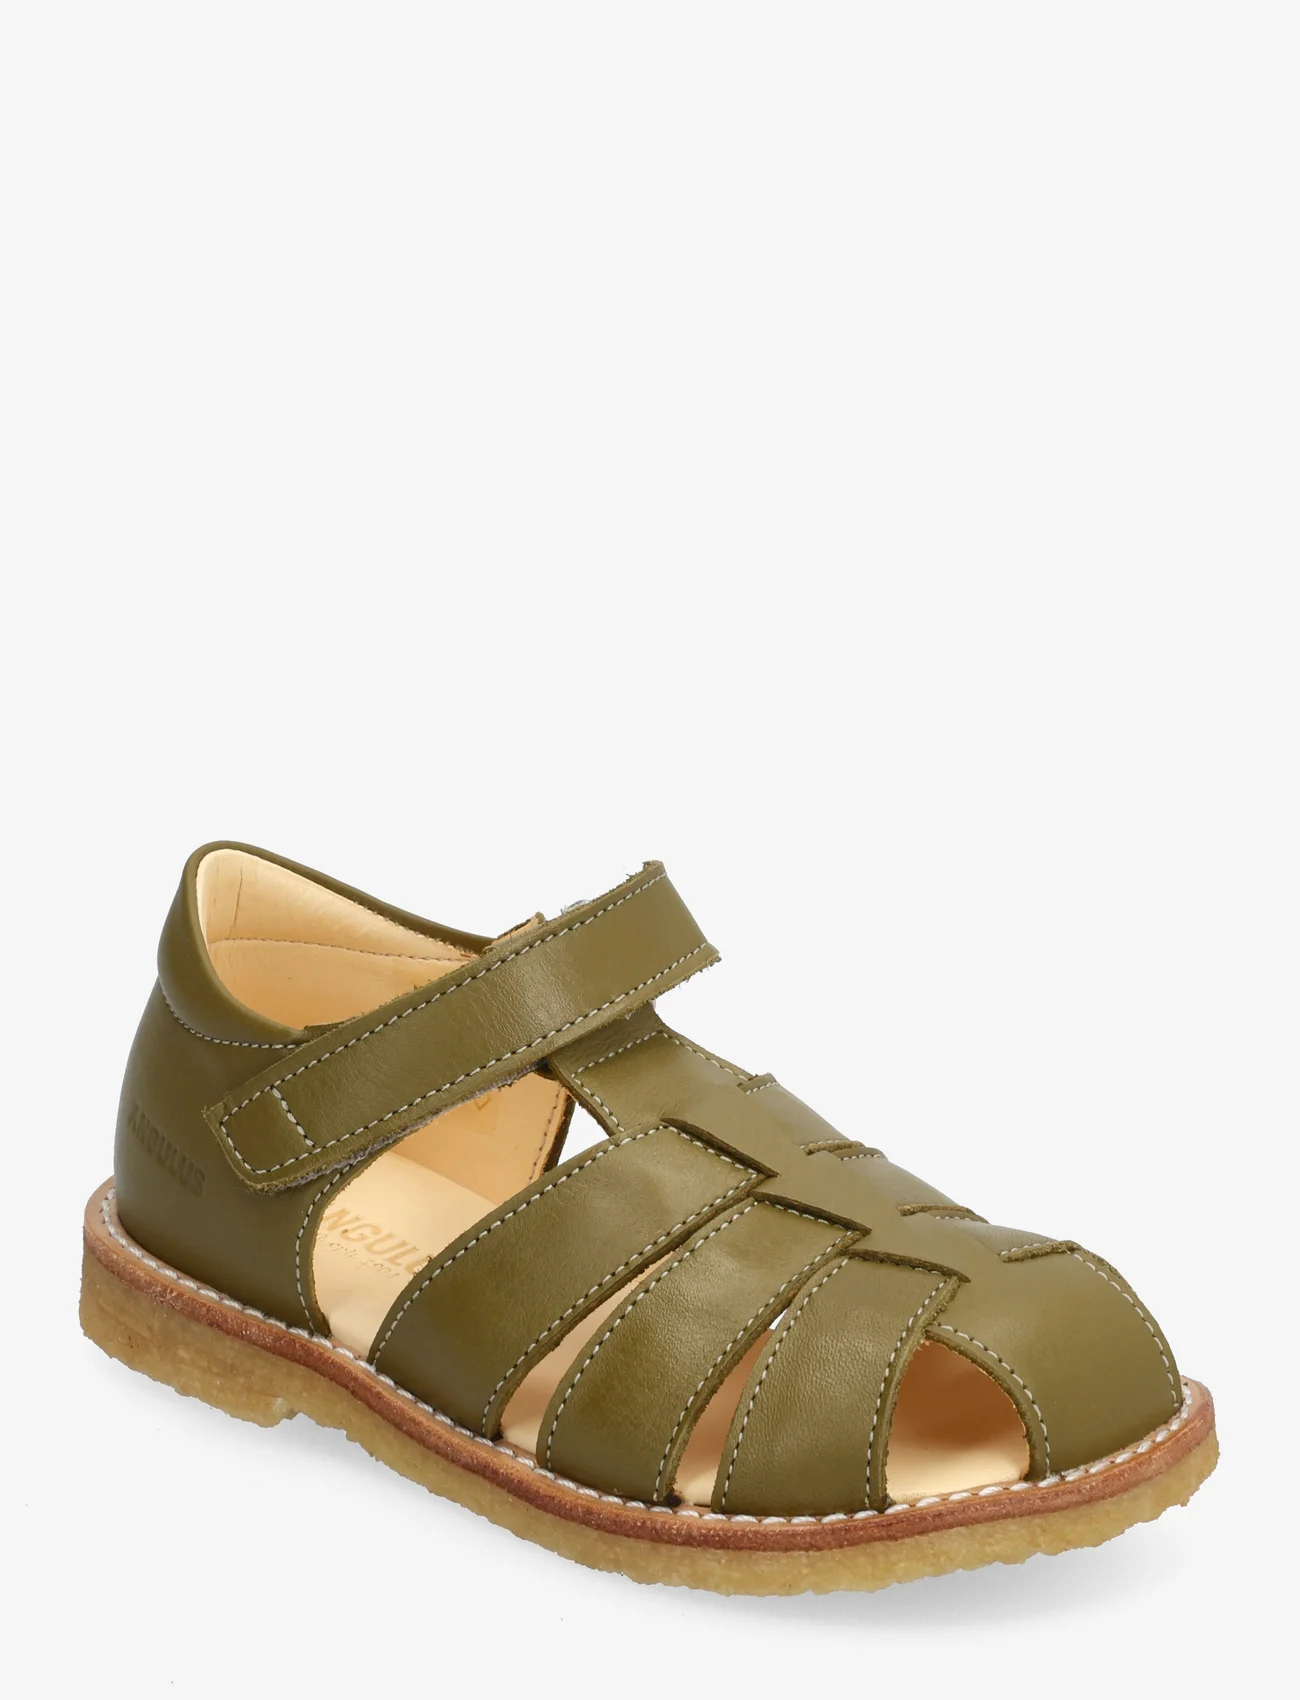 ANGULUS - Sandals - flat - closed toe - - sommarfynd - 1728 olive - 0